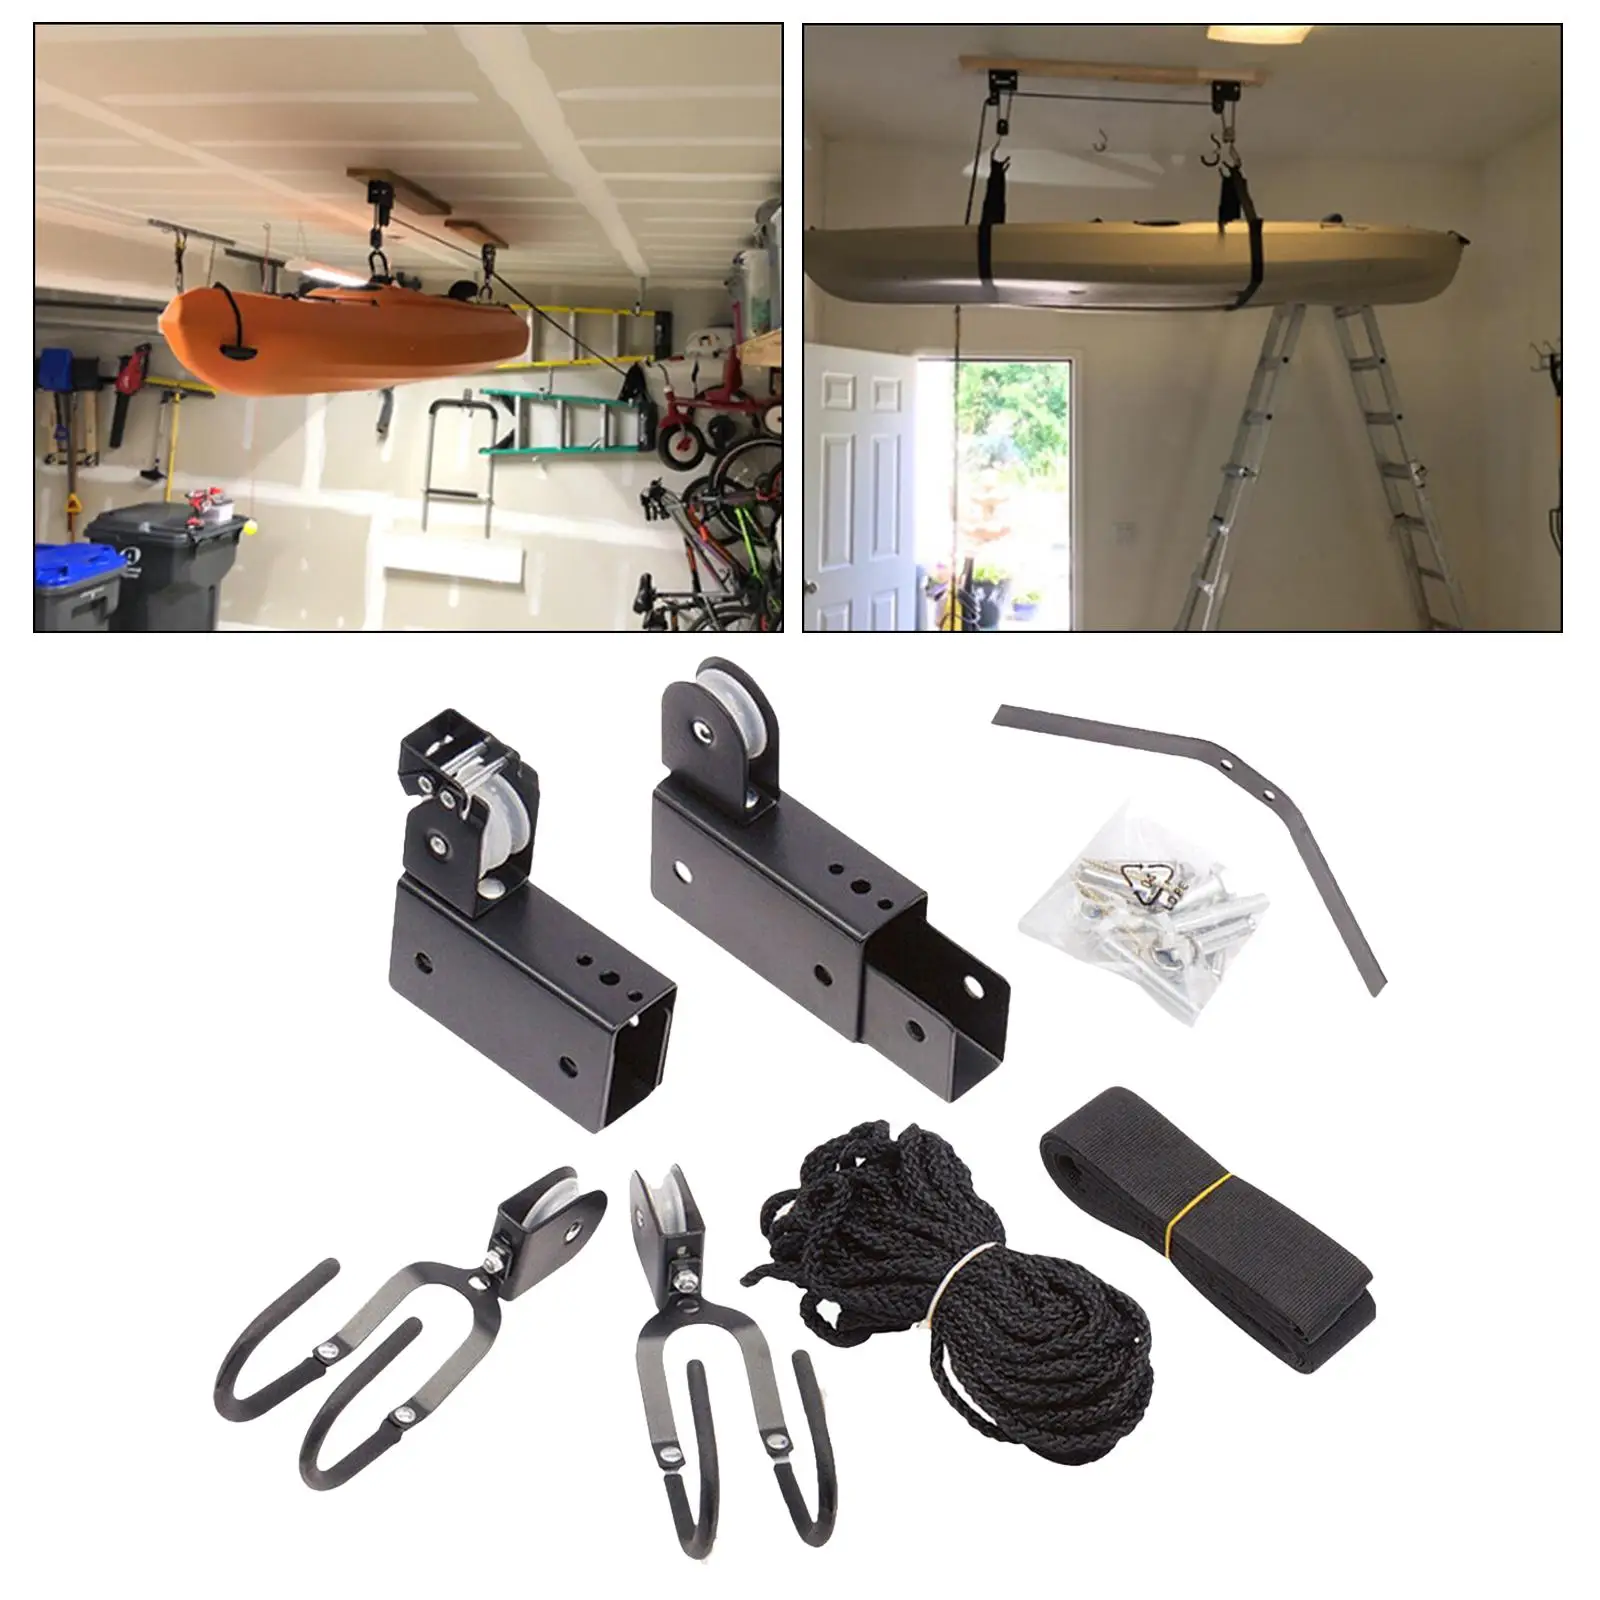 Bike Lift Pulley System Garage Ceiling Storage Hanging Mounted Organization 119 lb Capacity Hanger Kayak Hoist for Floats Canoes